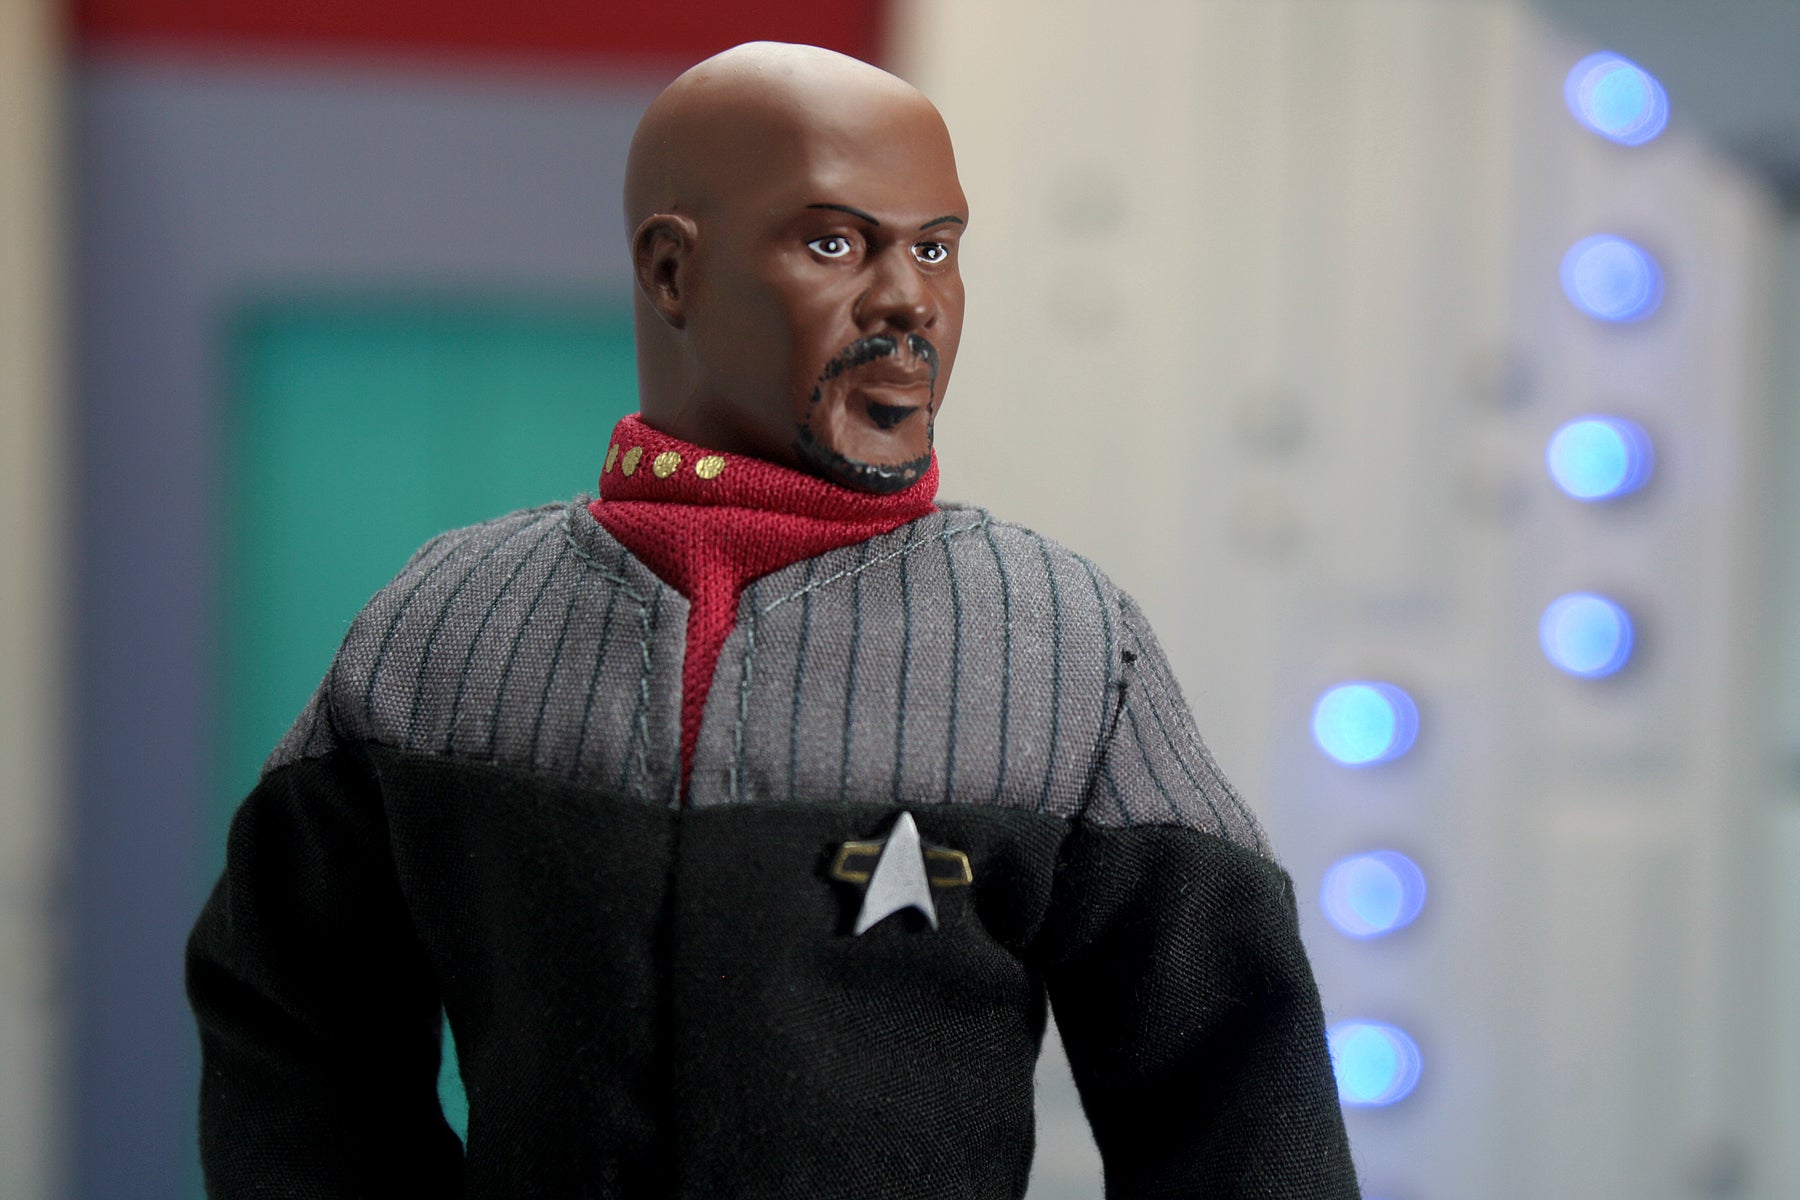 Mego Star Trek Wave 15 - Captain Sisko (Variant) 8" Action Figure